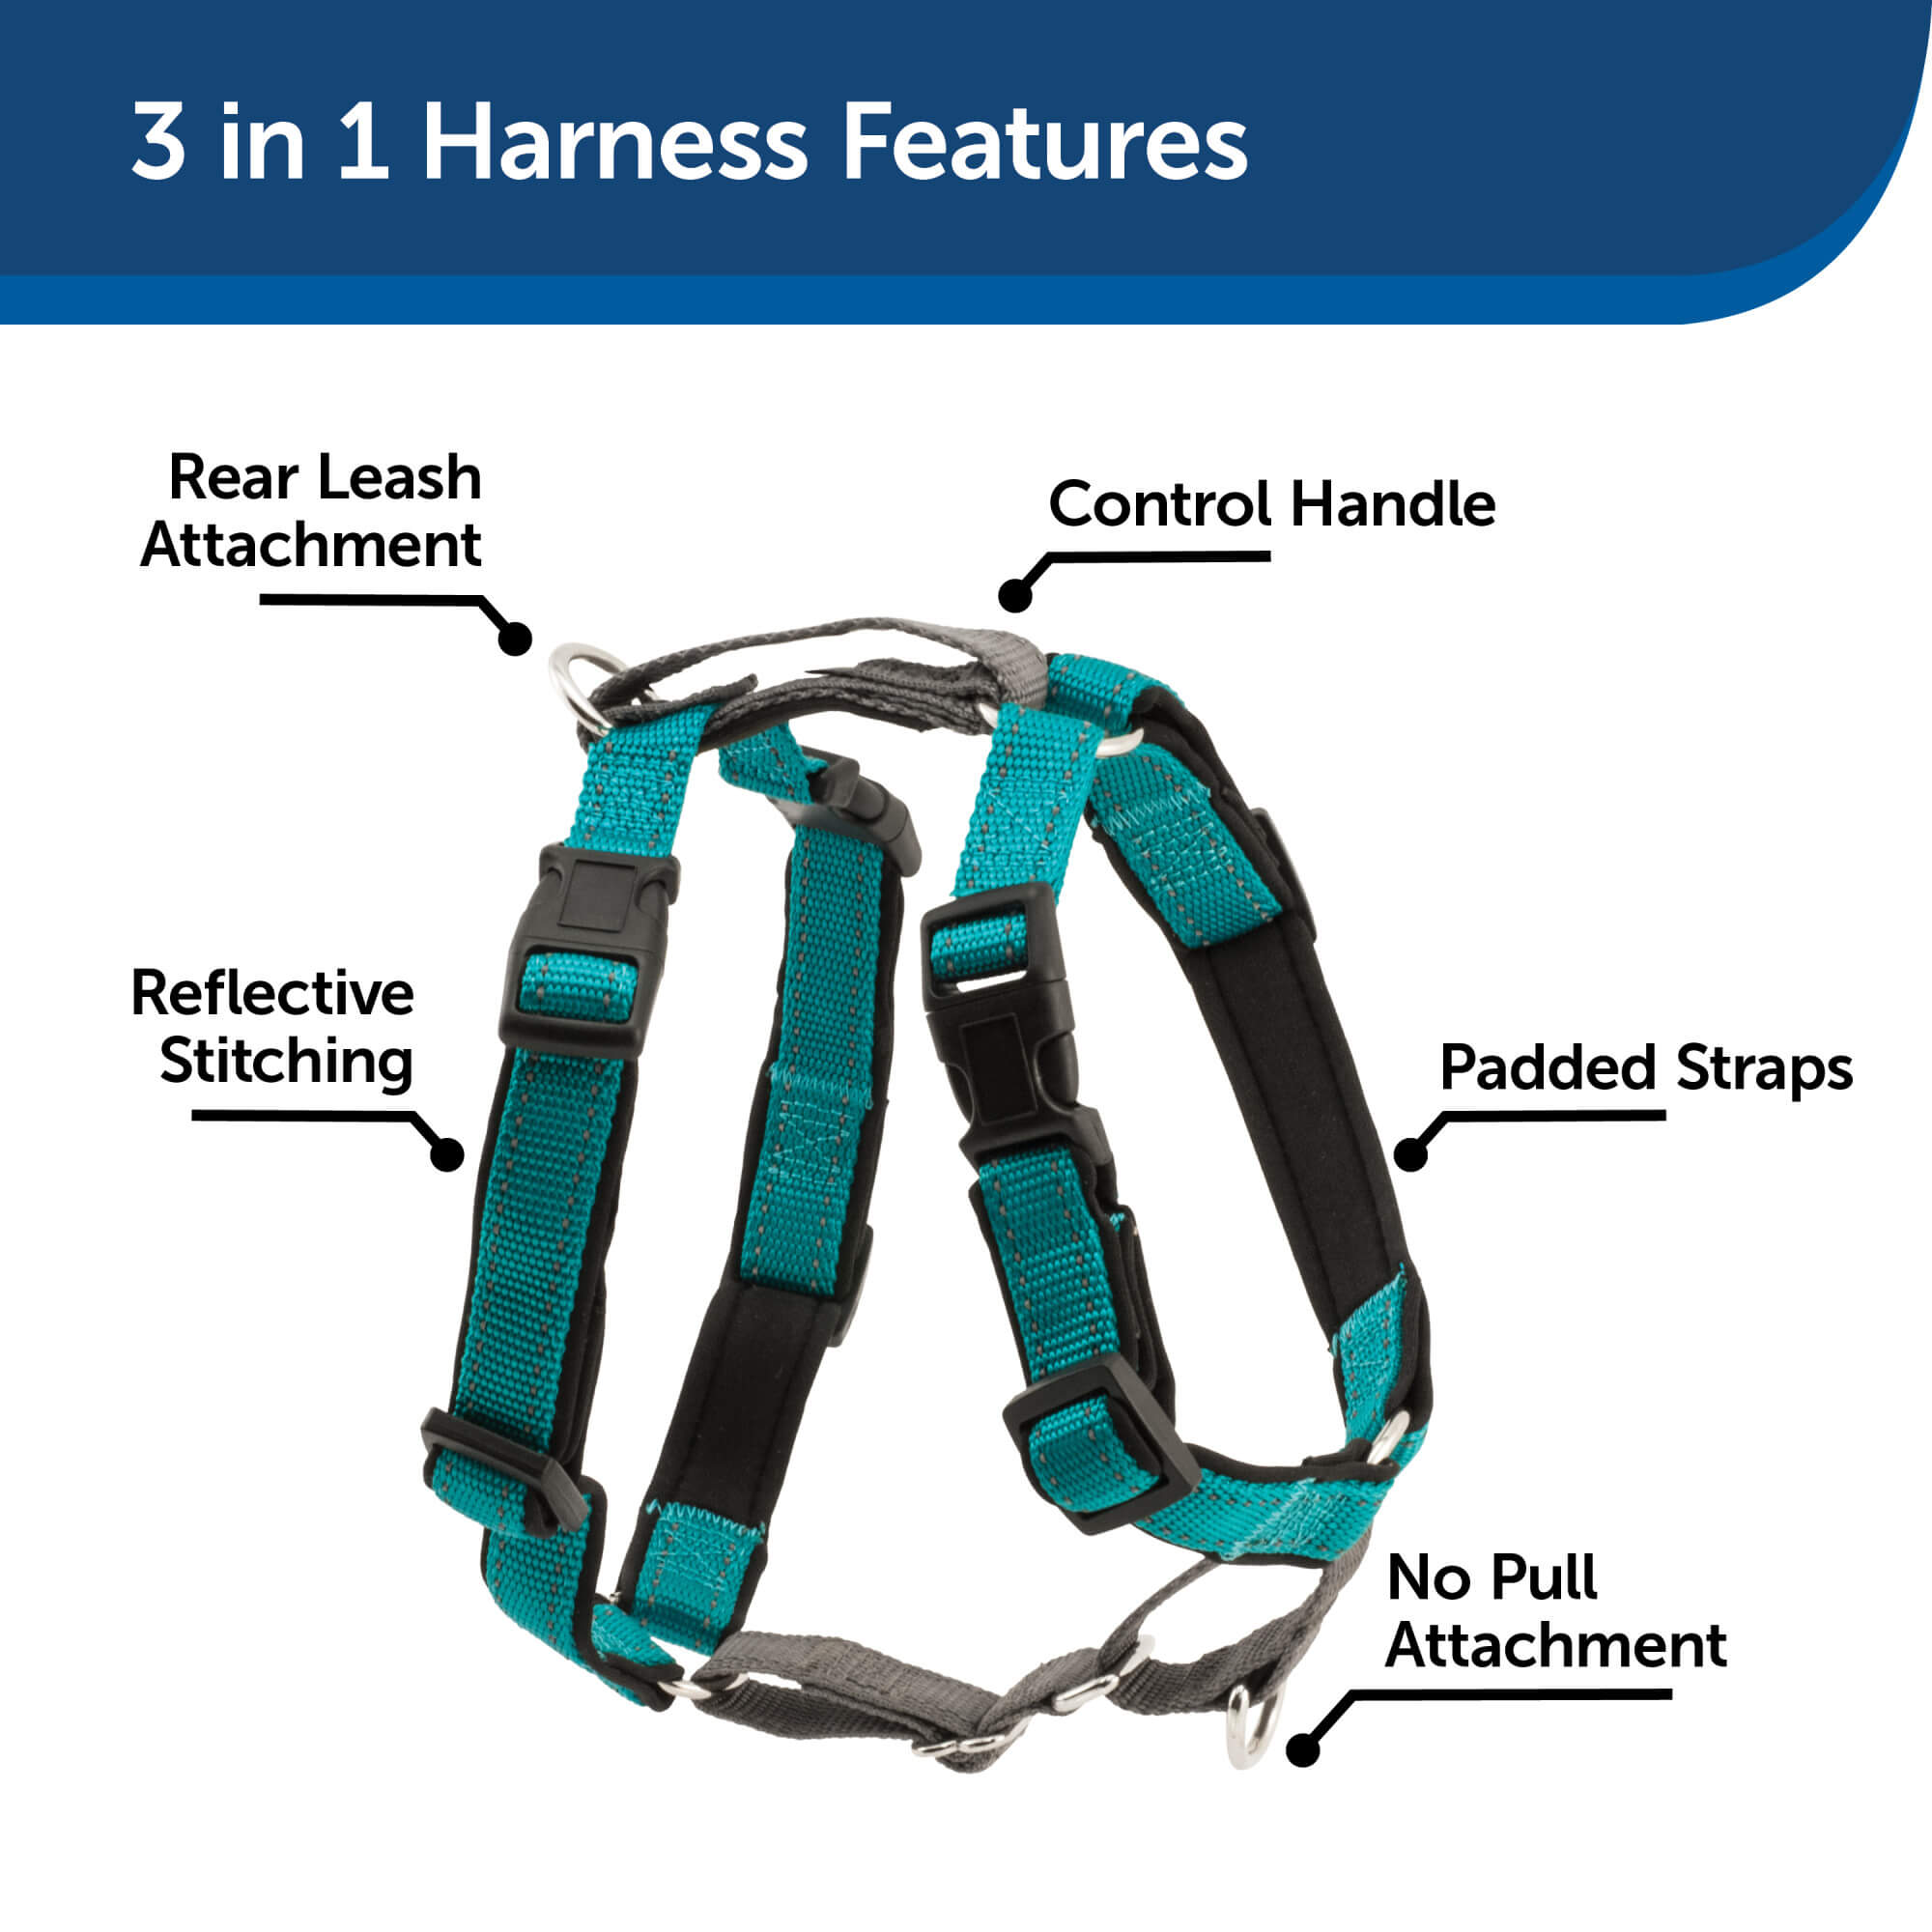 PetSafe 3 in 1 teal dog harness medium